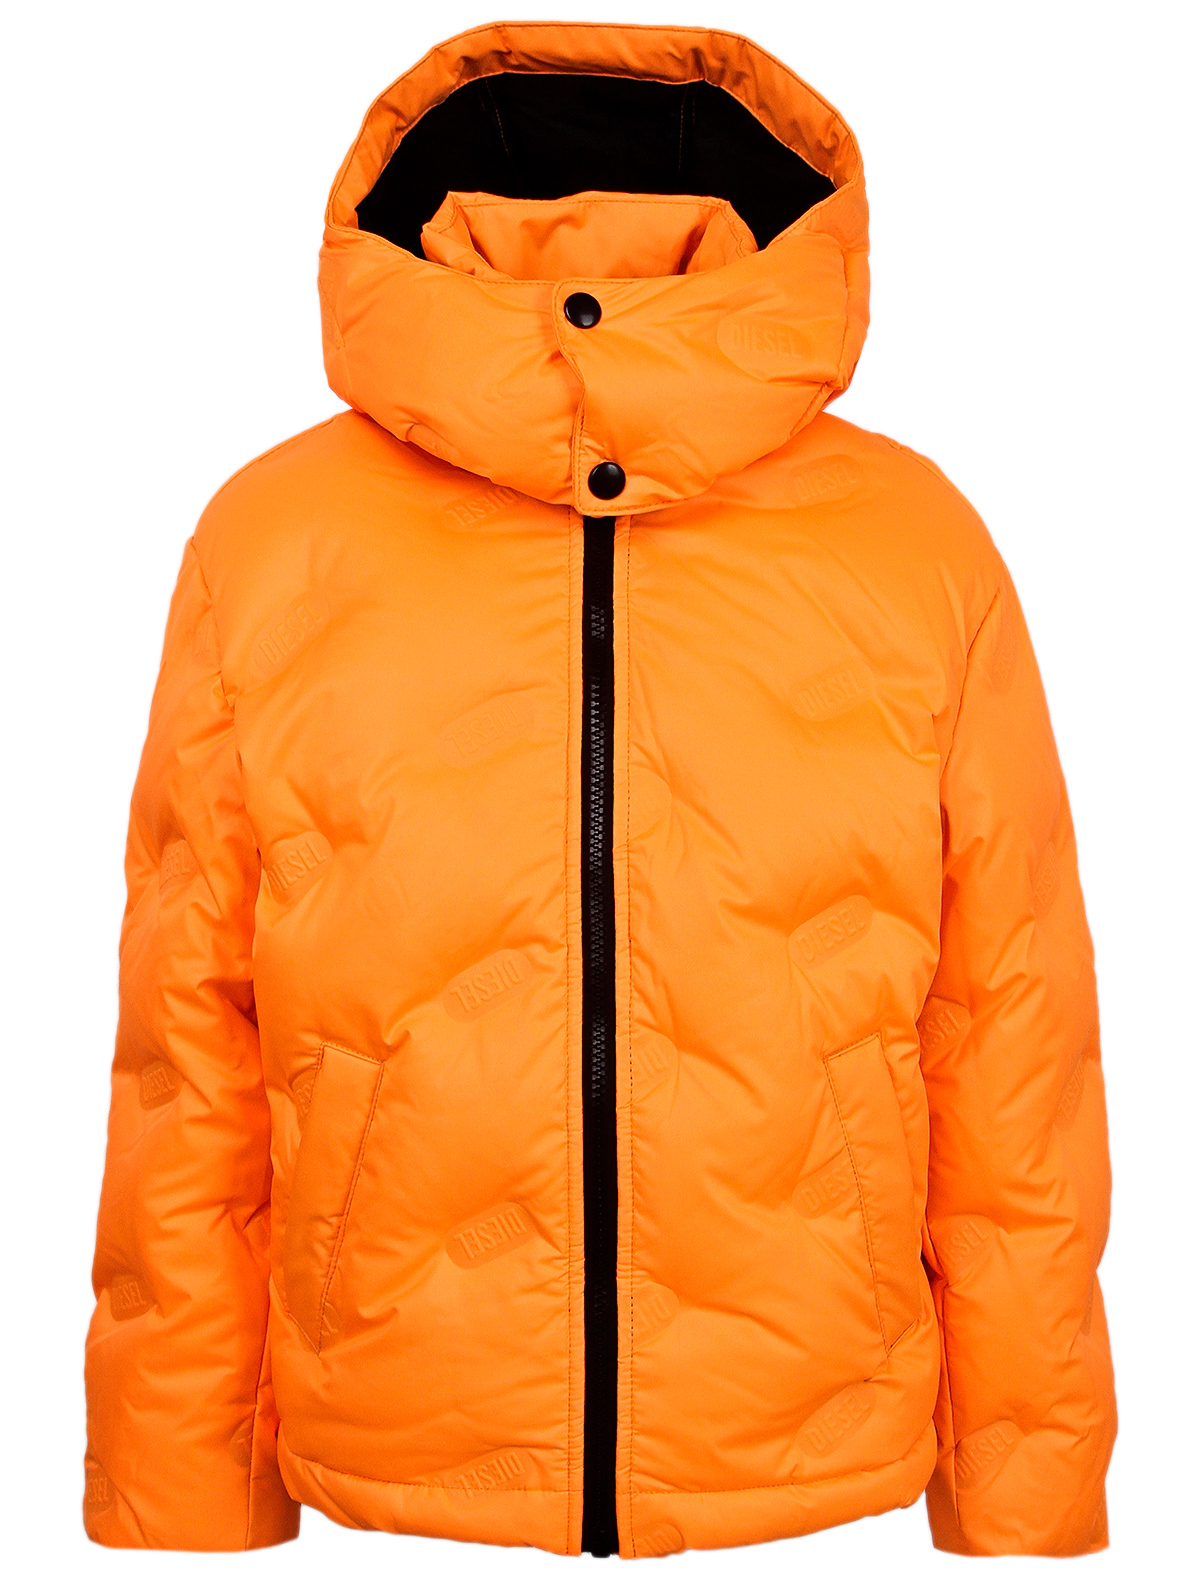 Куртка Diesel 2345554, цвет оранжевый, размер 9 1074529180955 - фото 1